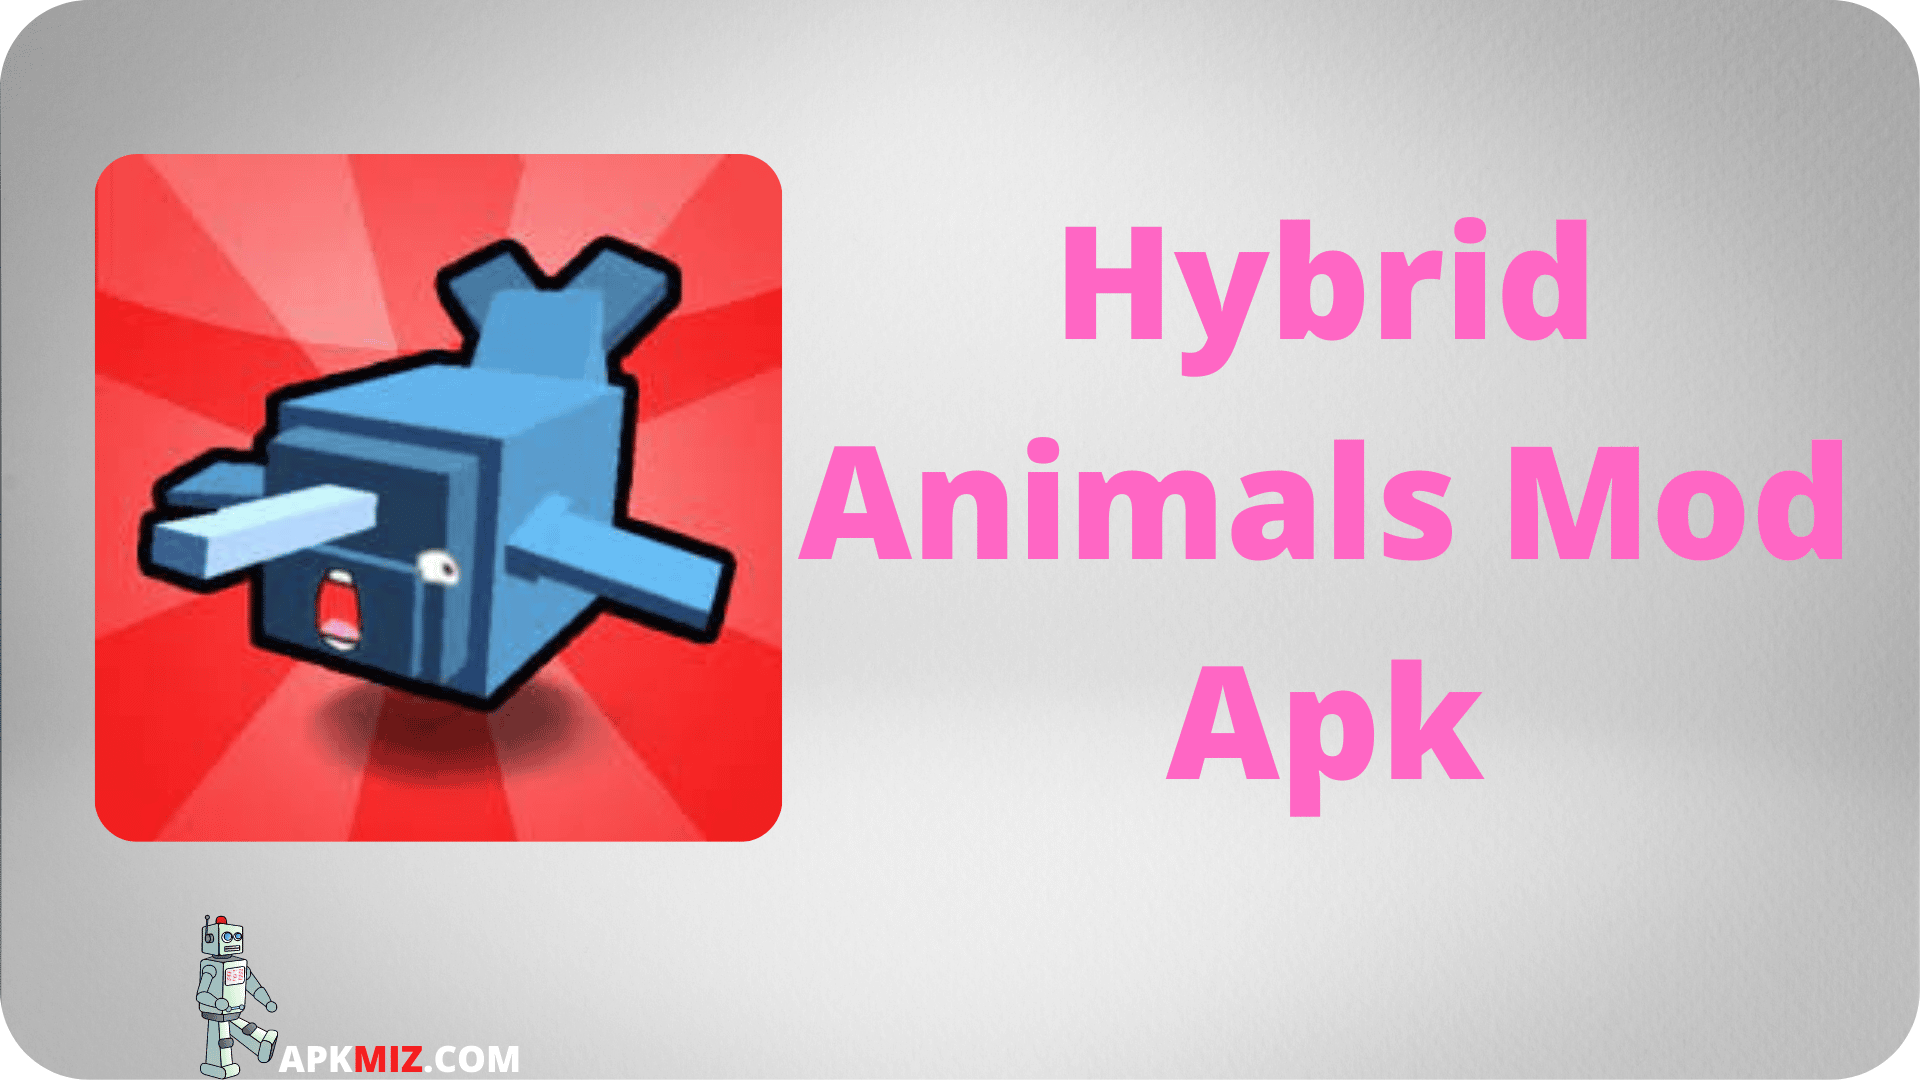 Hybrid Animals Mod Apk